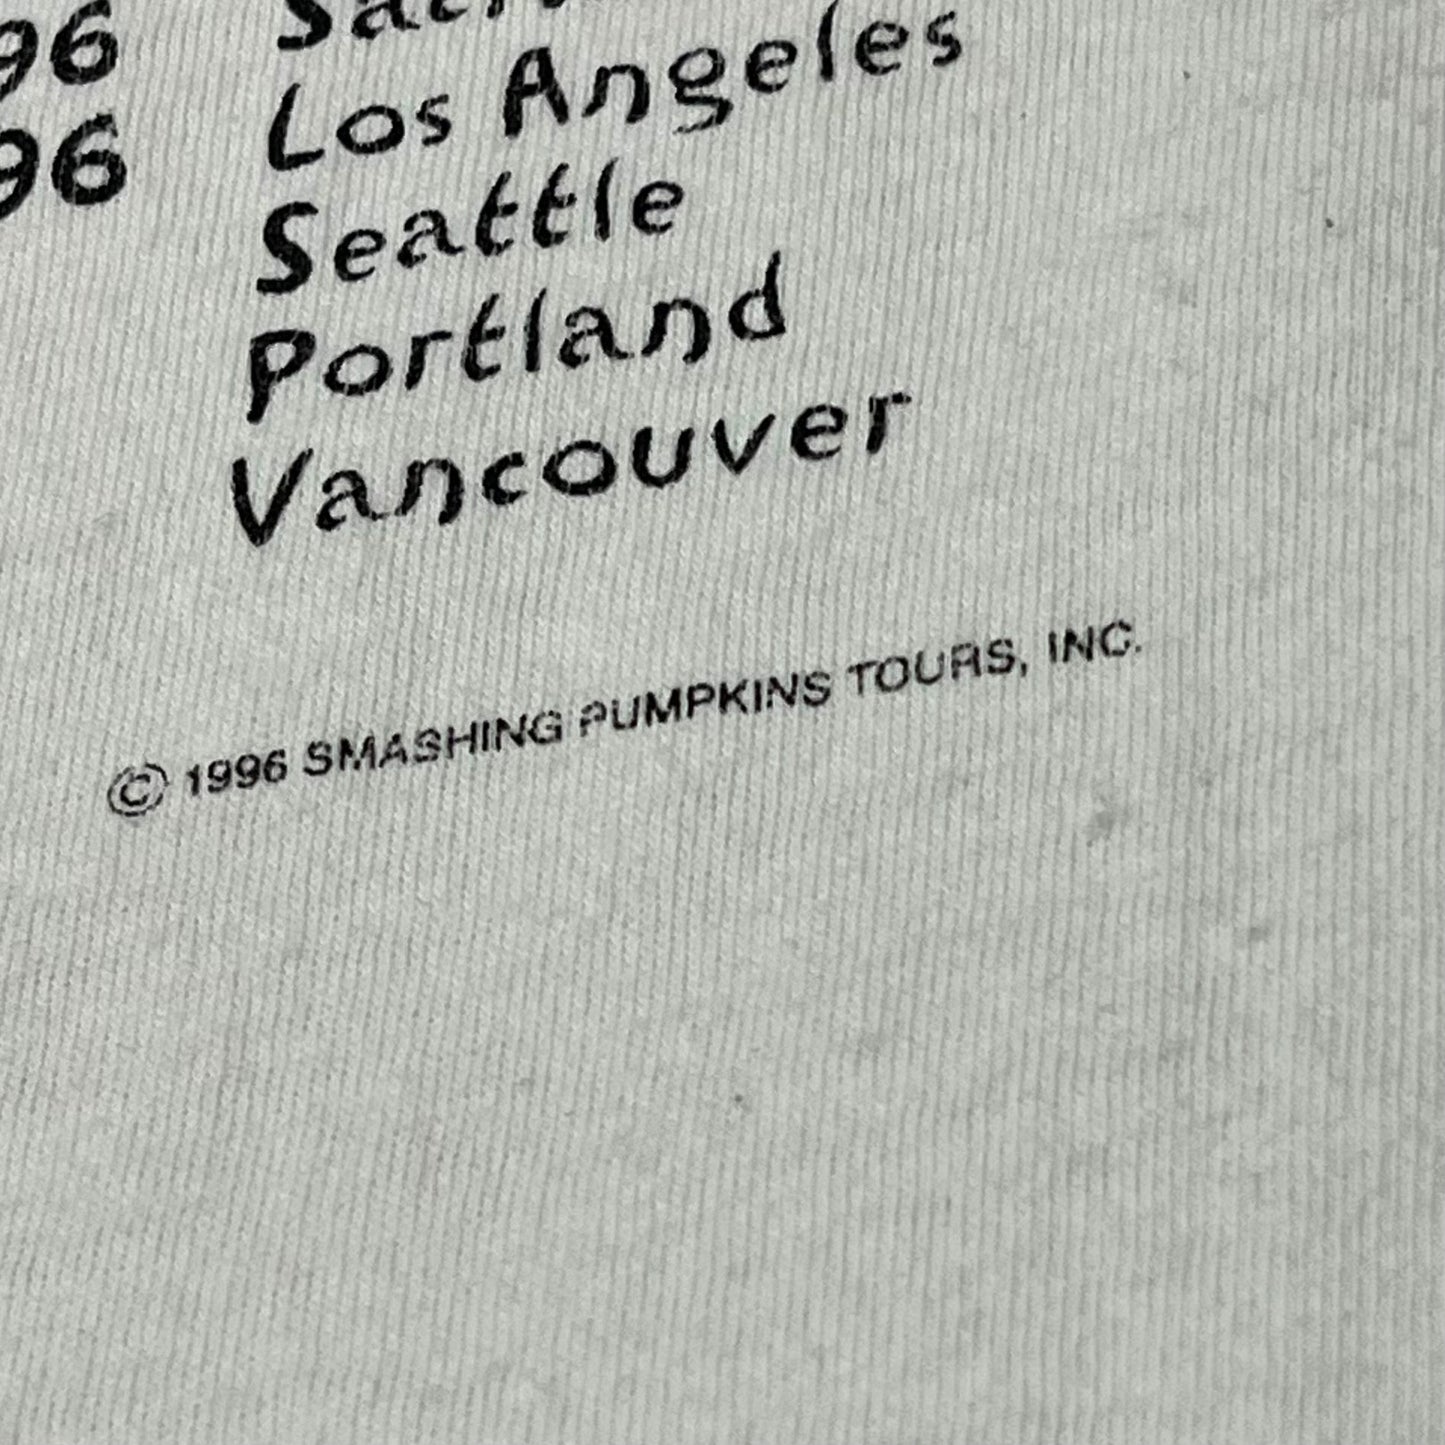 90’s Smashing Pumpkins
“lnfinite Sadness Tour”bandt-shirt